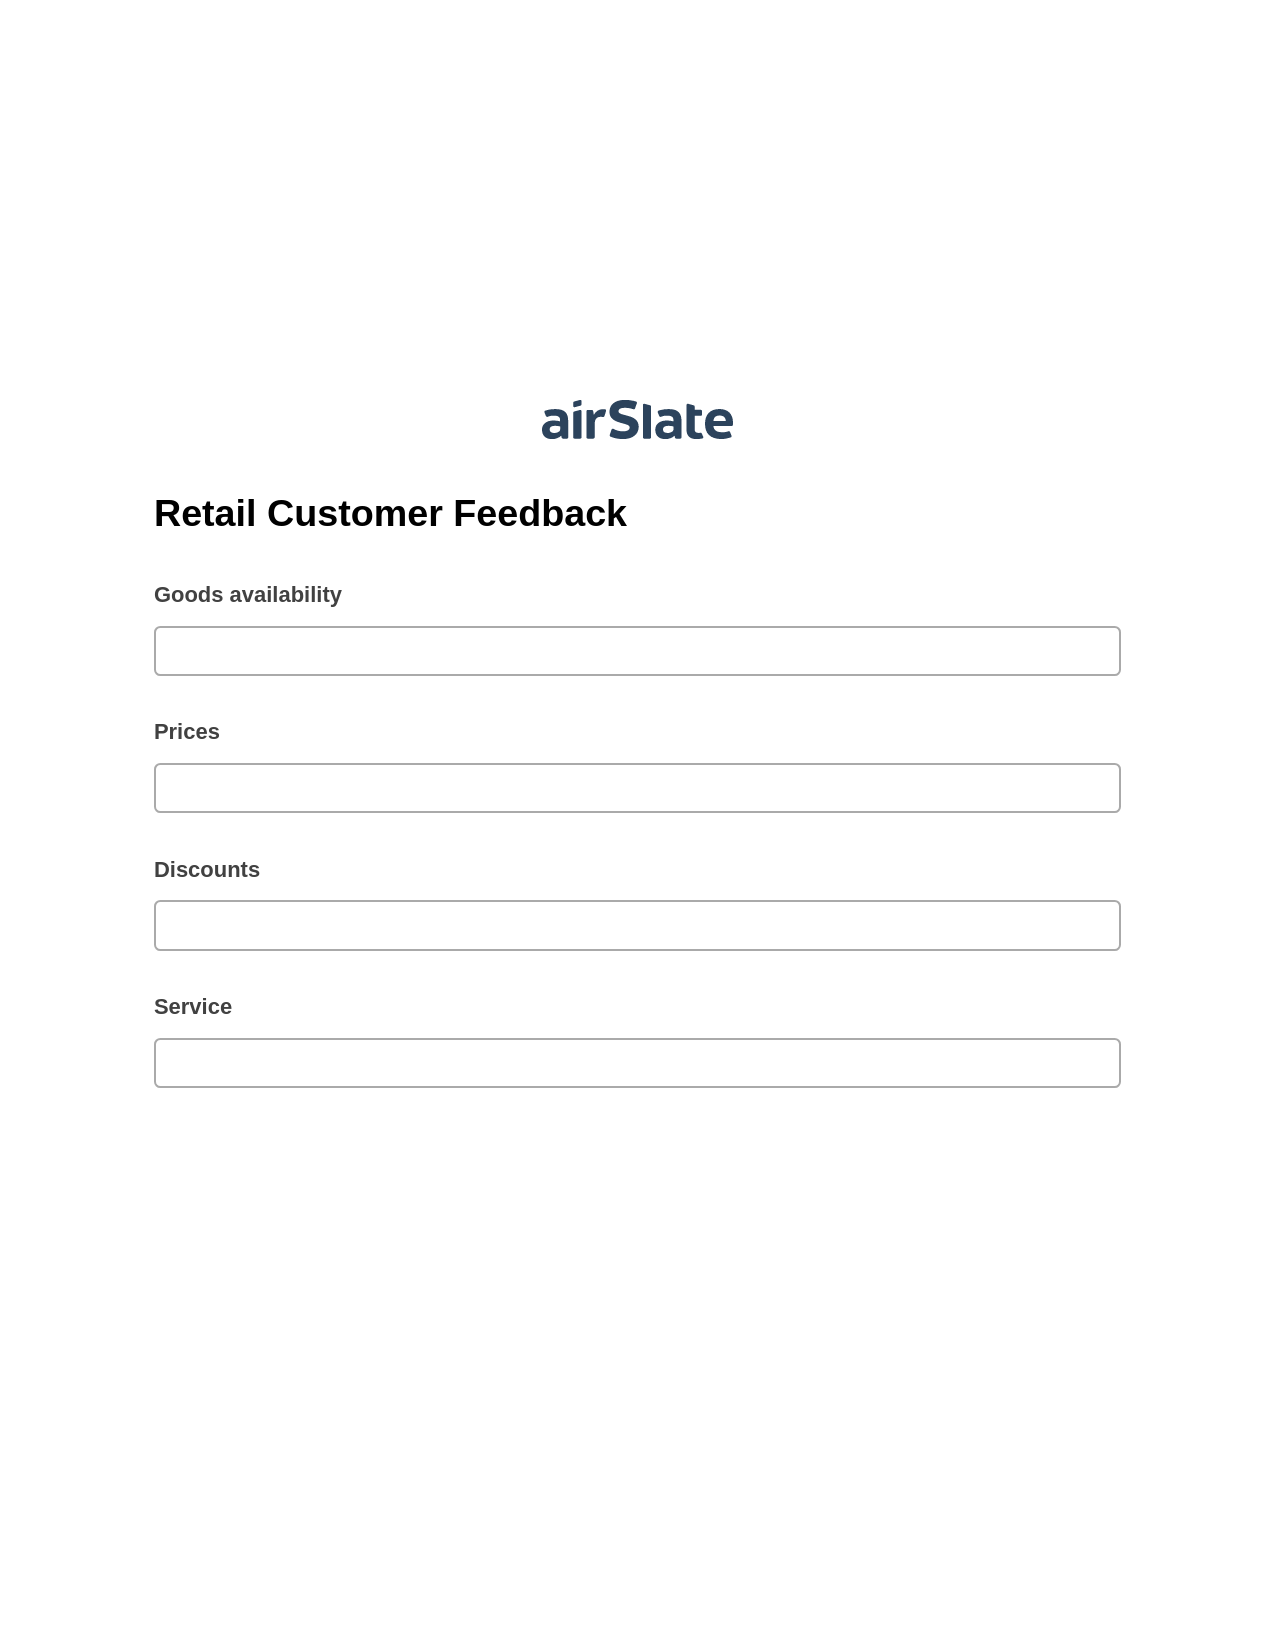 Retail Customer Feedback Pre-fill Slate from MS Dynamics 365 Records Bot, SendGrid send Campaign bot, Box Bot